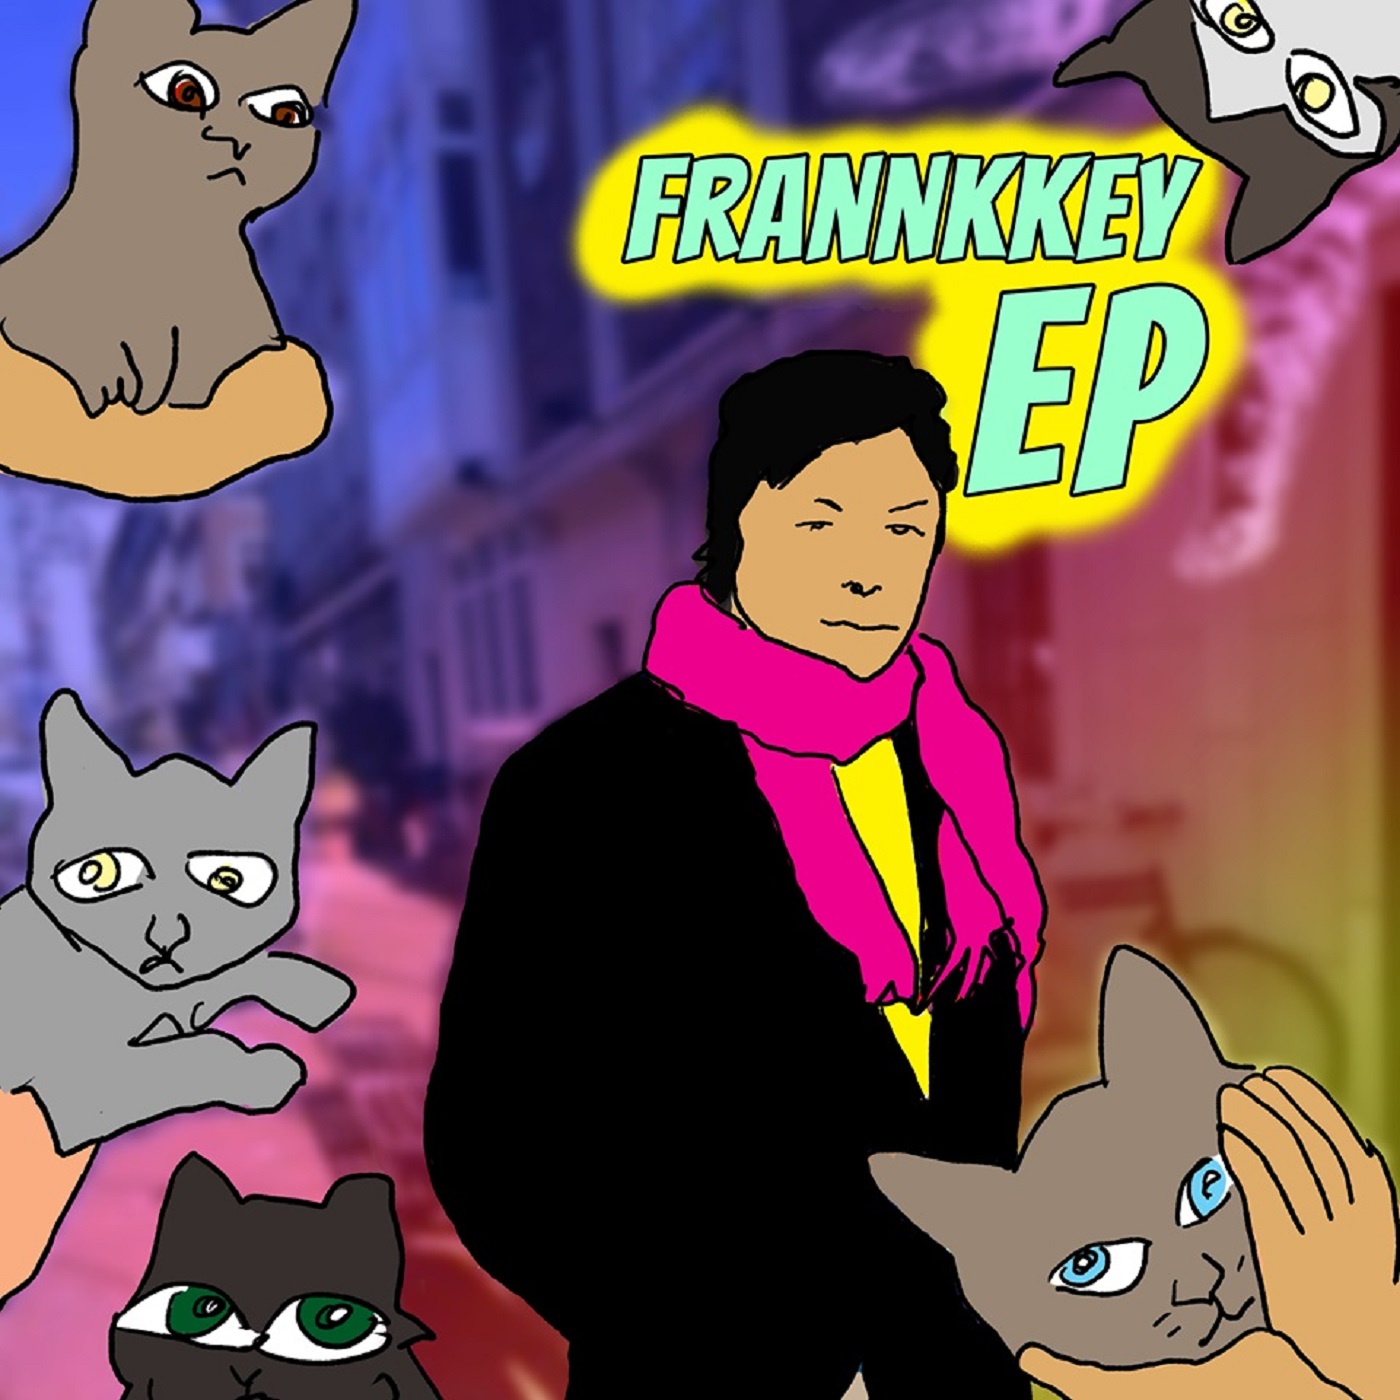 Frannkkey EP